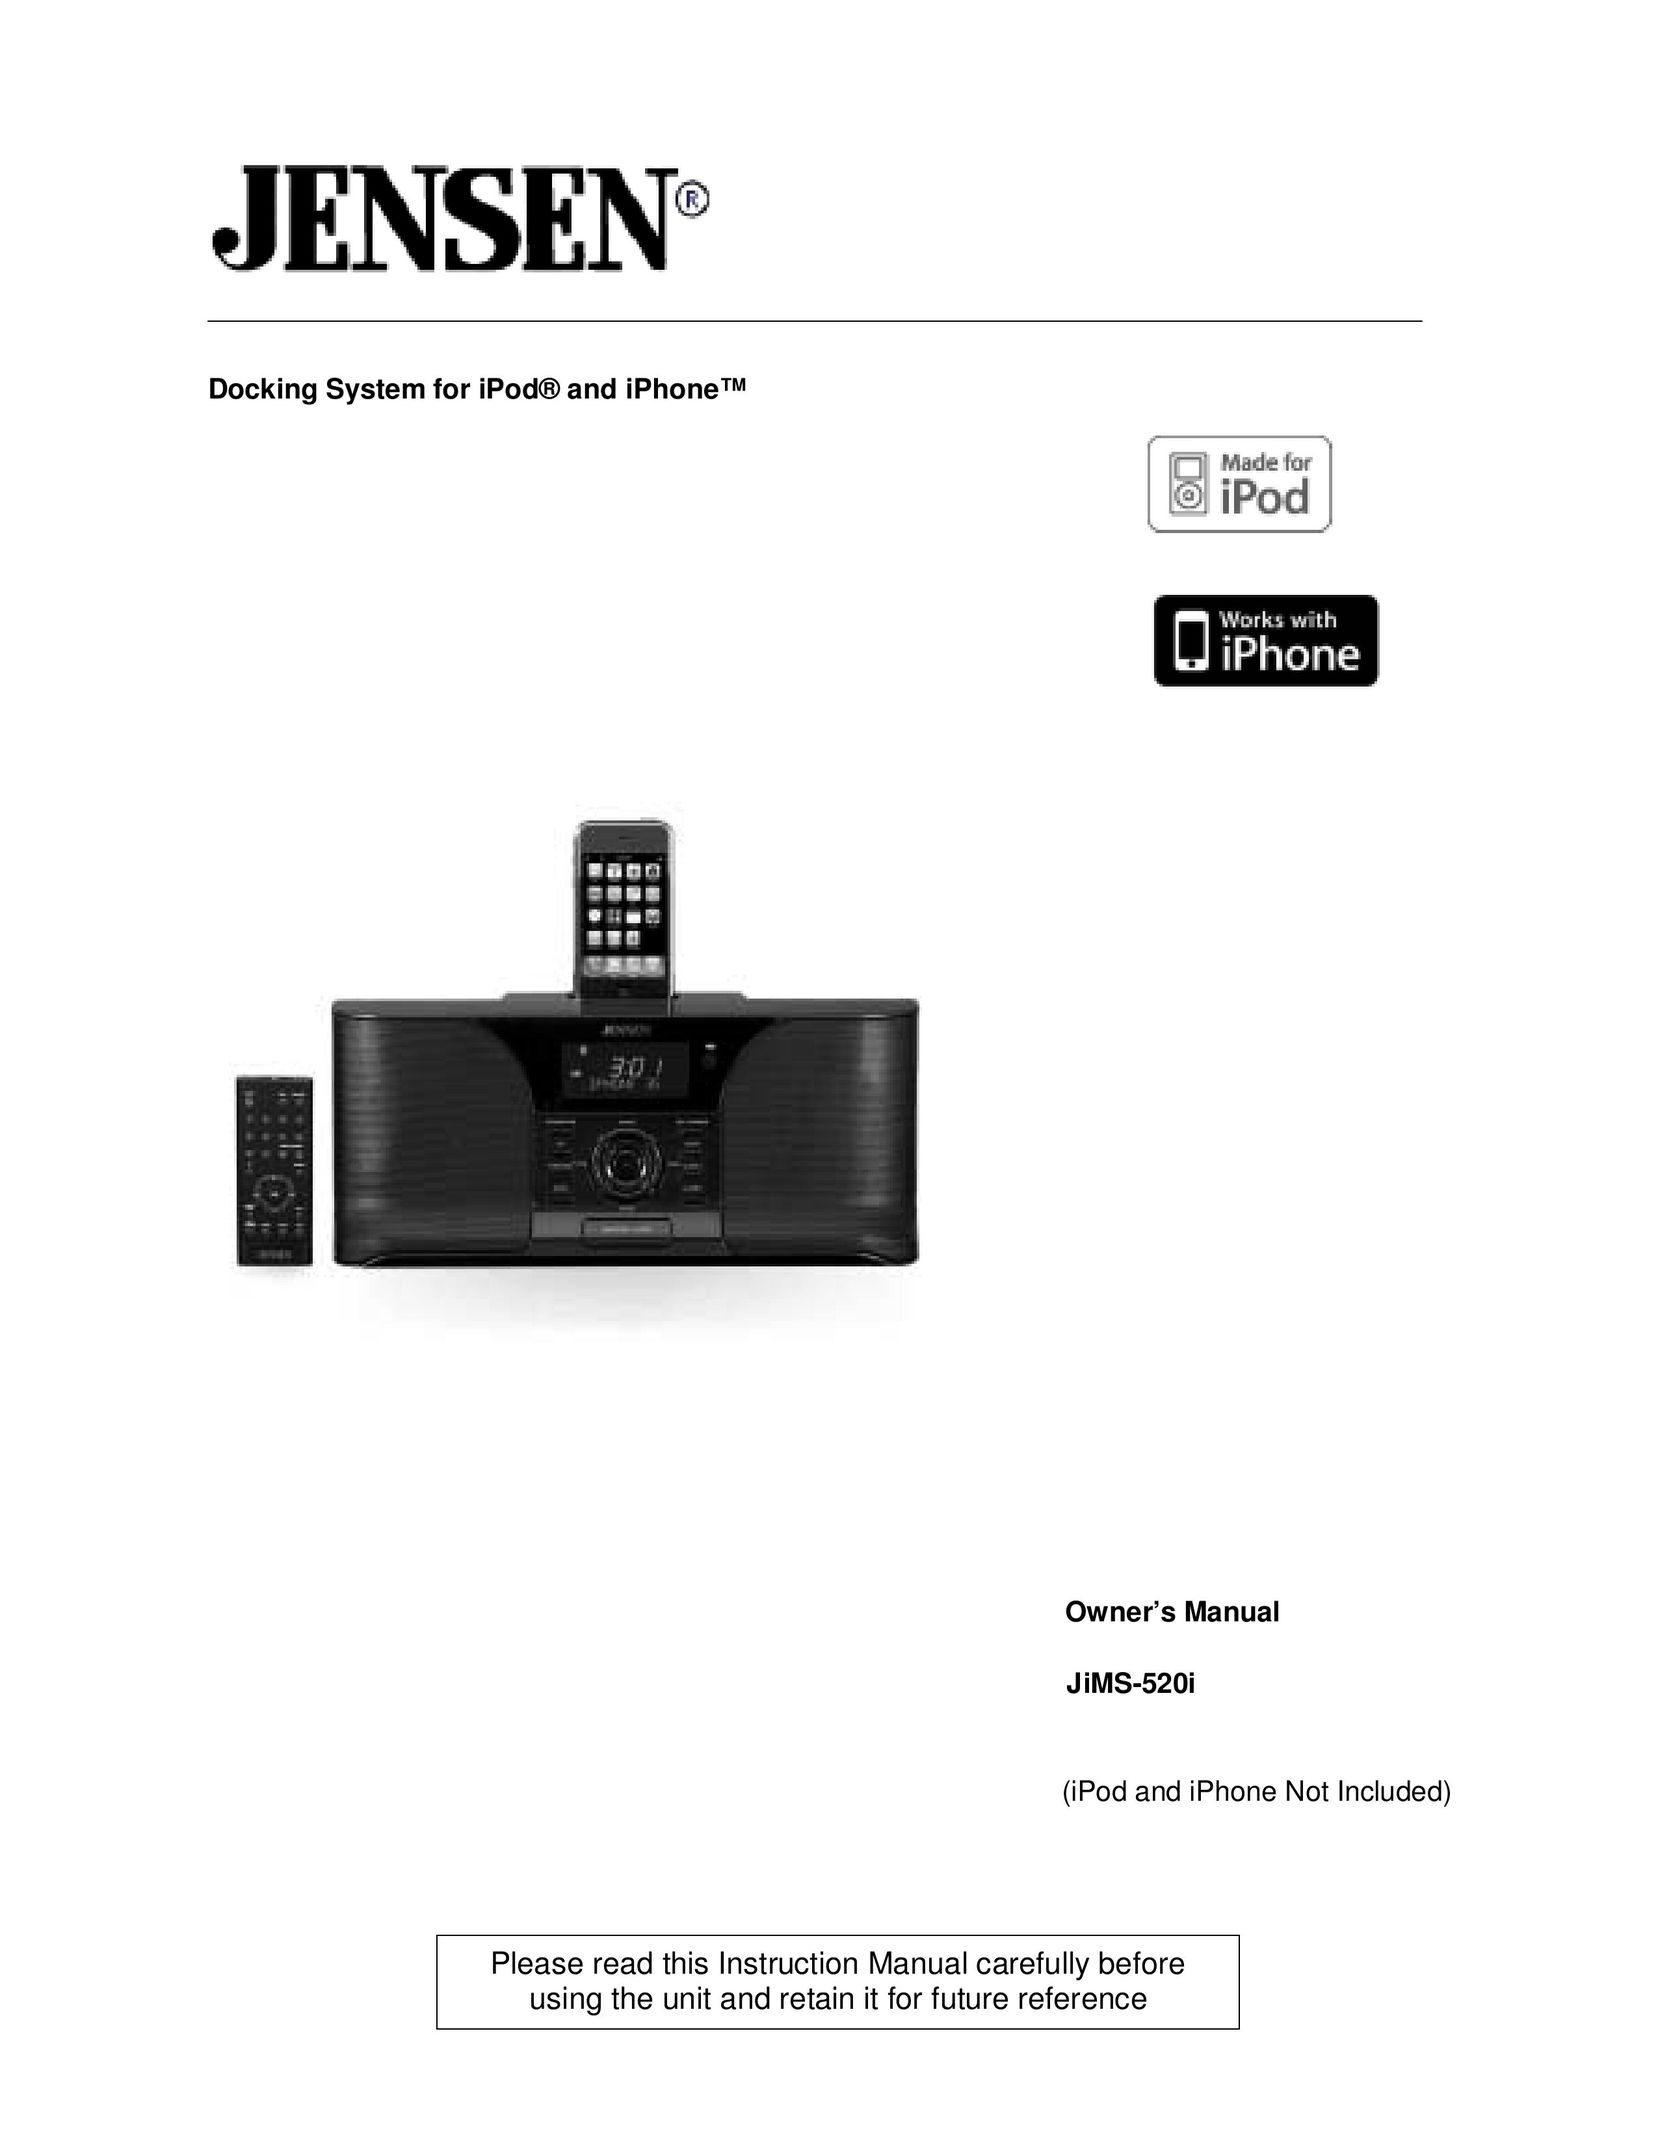 Jensen JiMS-520i MP3 Docking Station User Manual